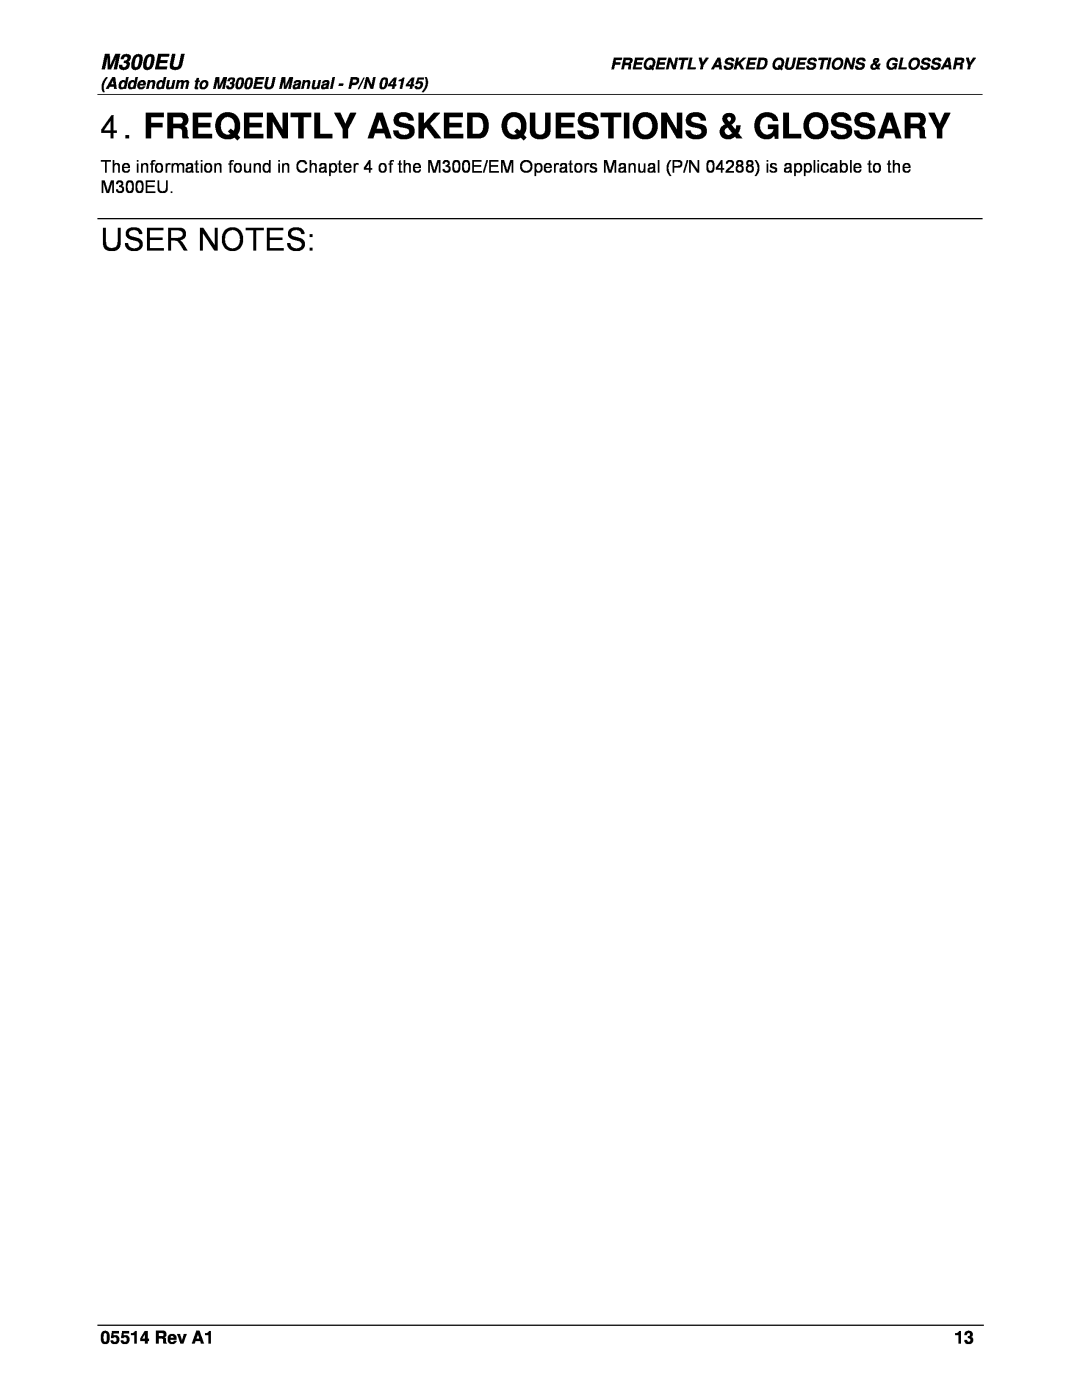 Teledyne Model 300EU manual Freqently Asked Questions & Glossary, User Notes, M300EU, Rev A1 